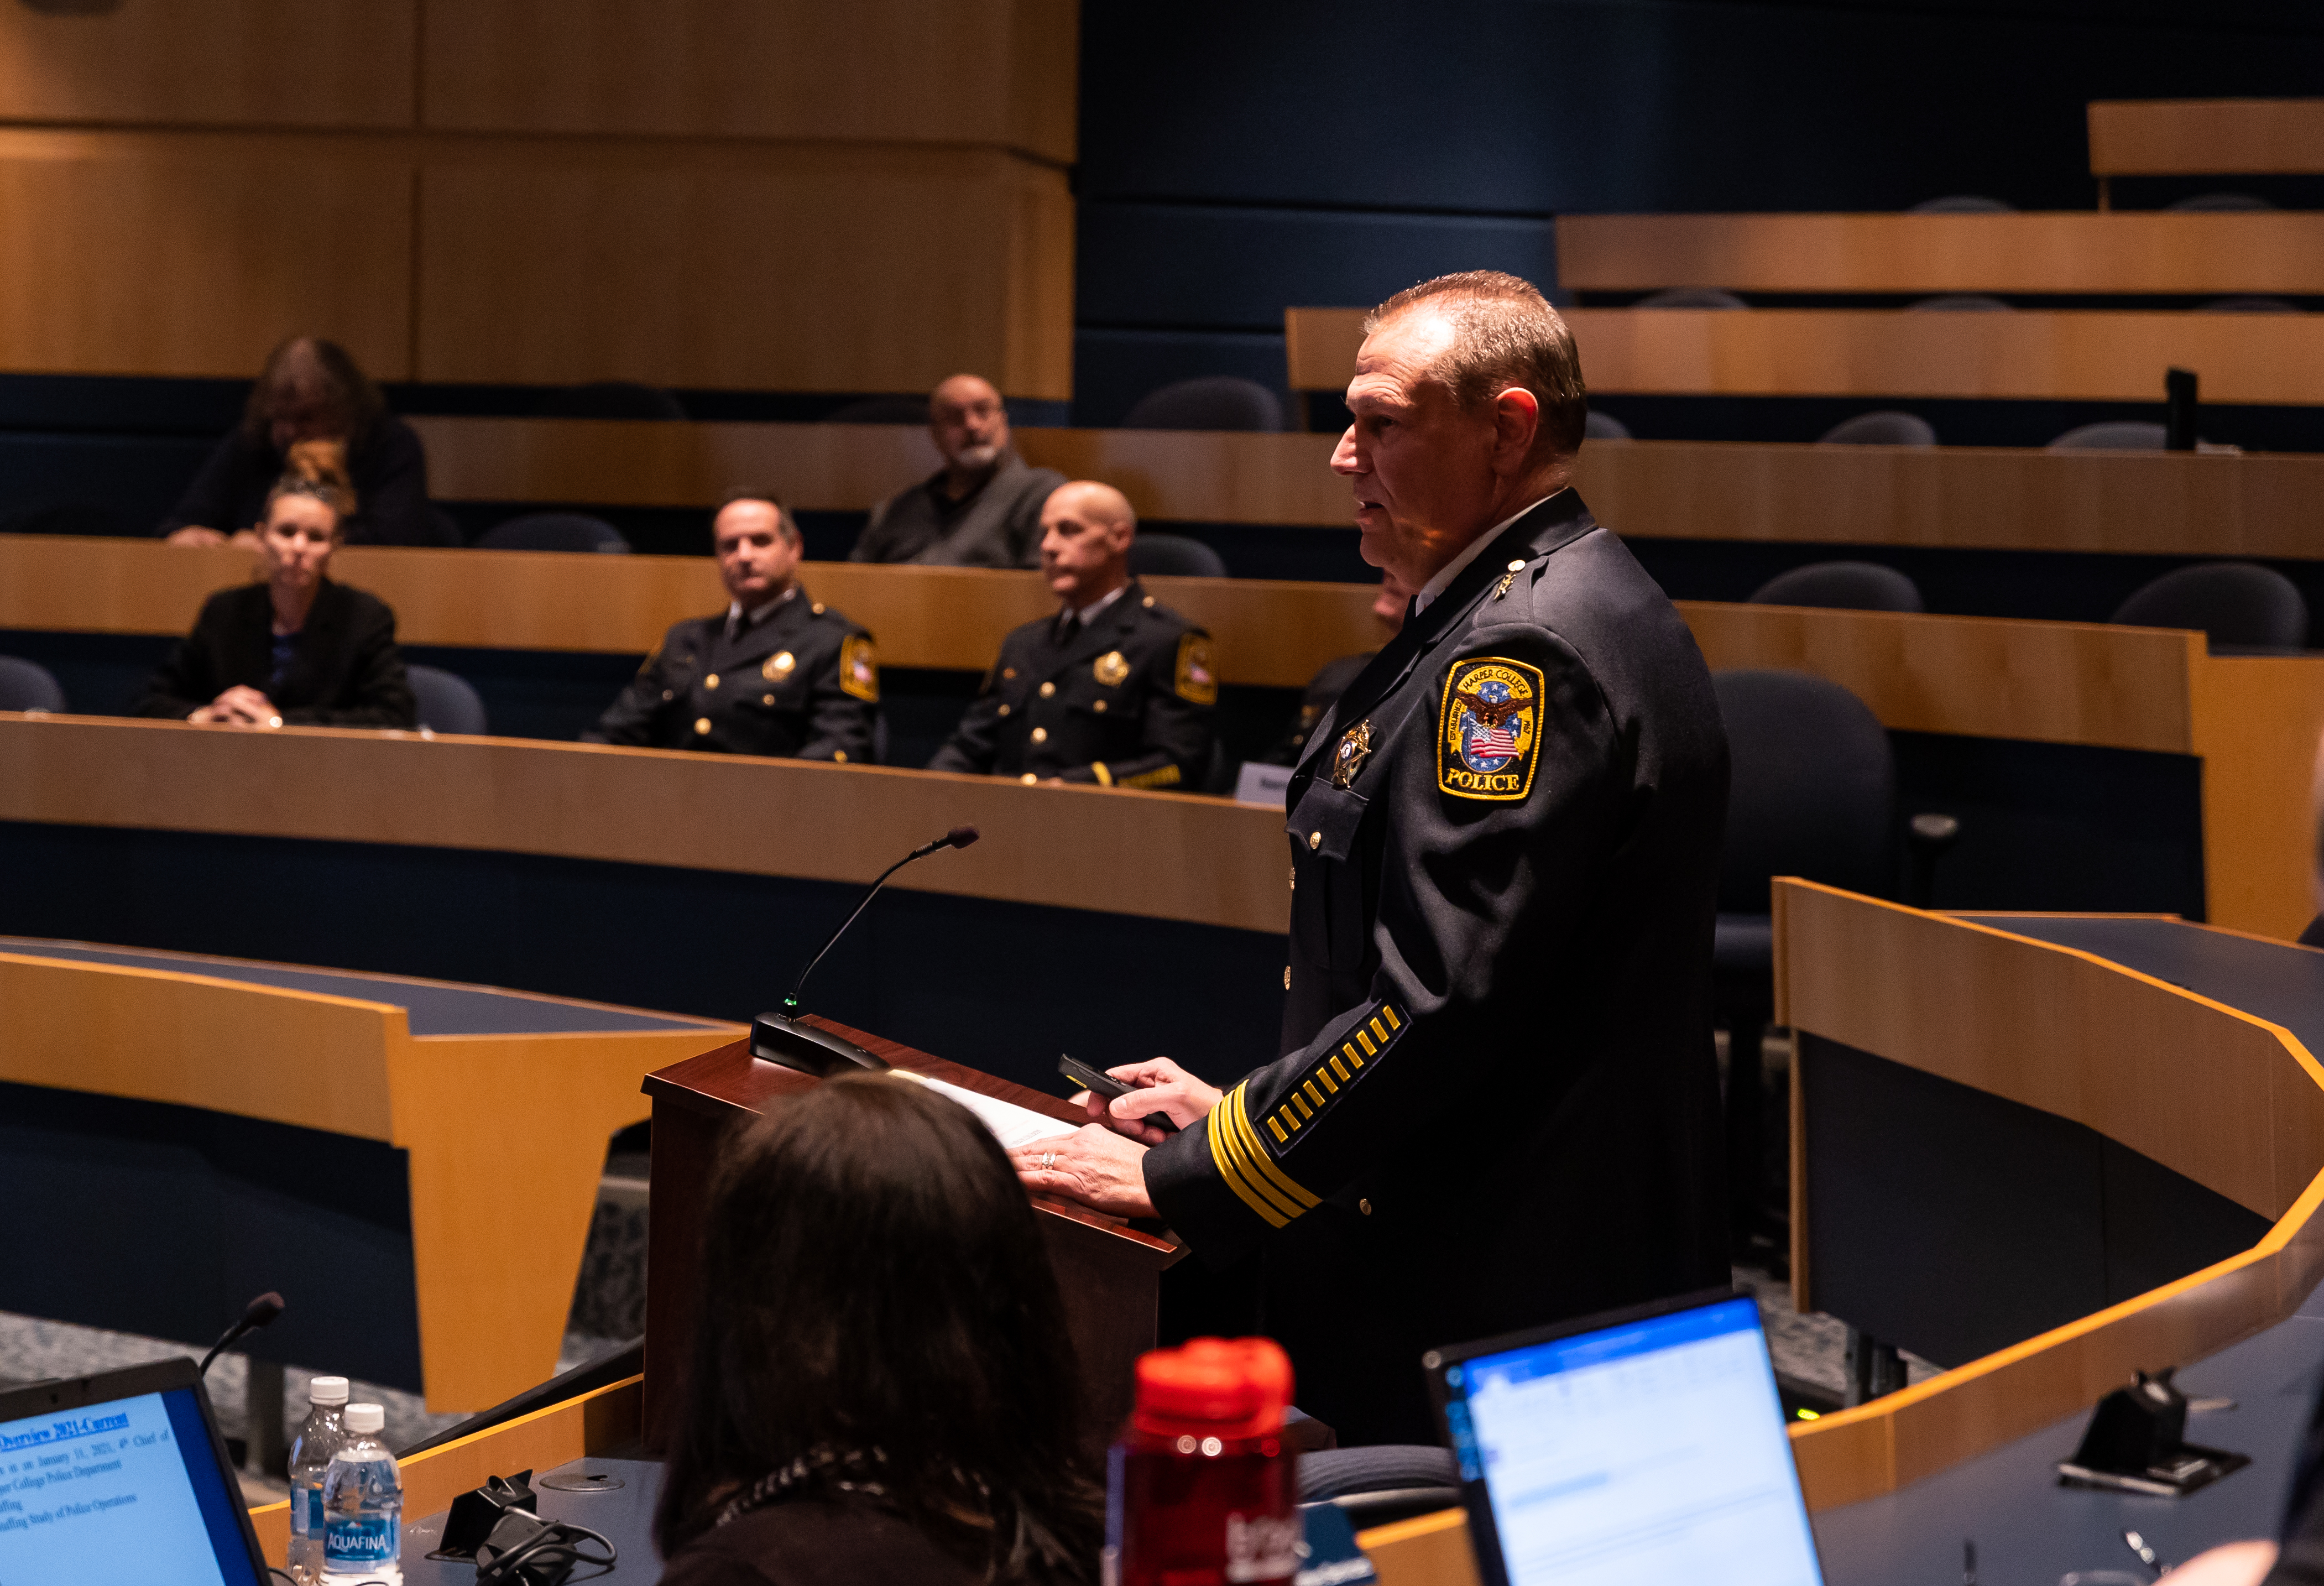 Harper College Chief of Police John Lawson gives a presentation